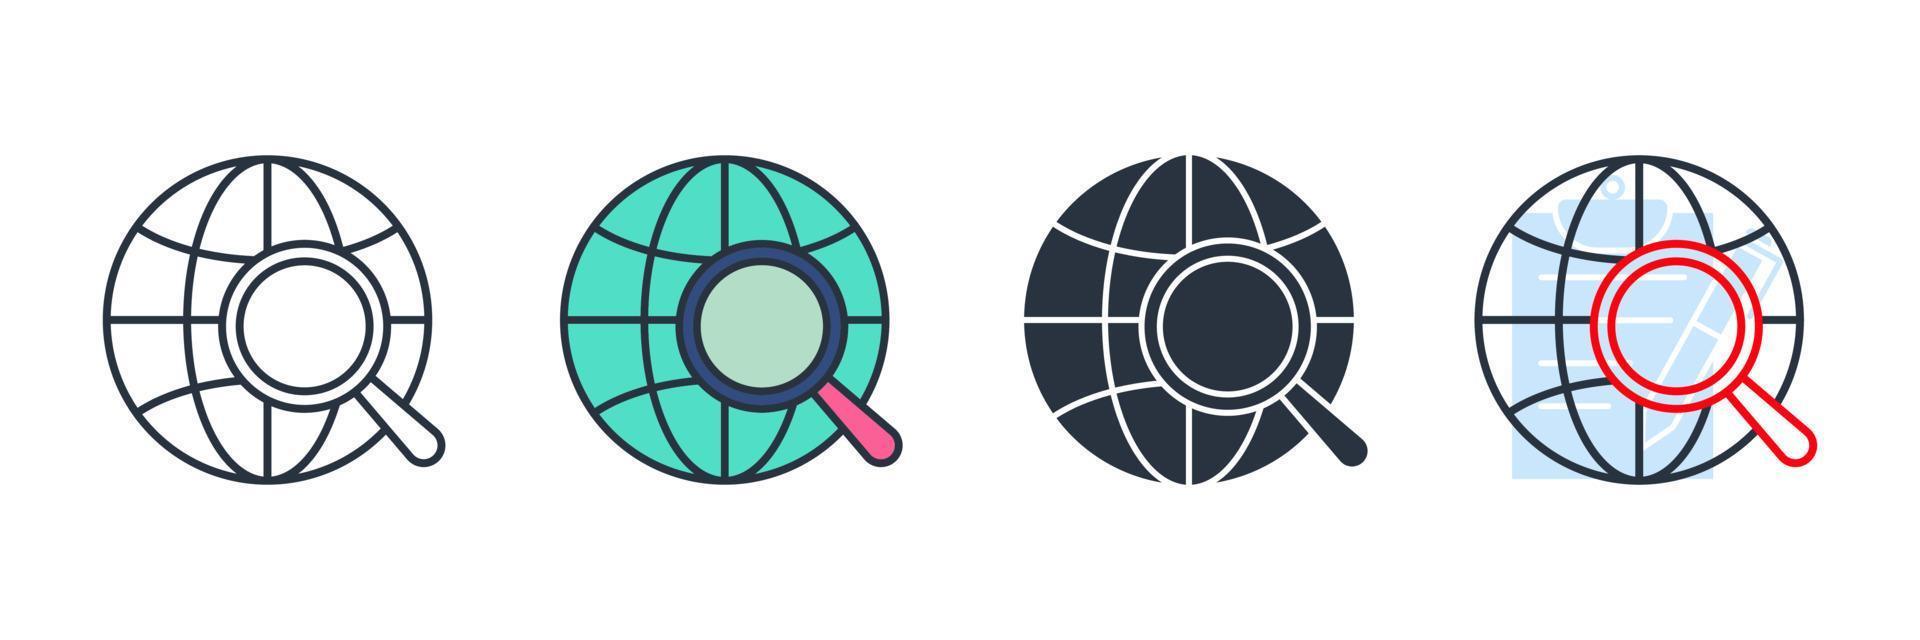 globale Datensymbol-Logo-Vektorillustration. Globus mit Lupensymbolvorlage für Grafik- und Webdesign-Sammlung vektor